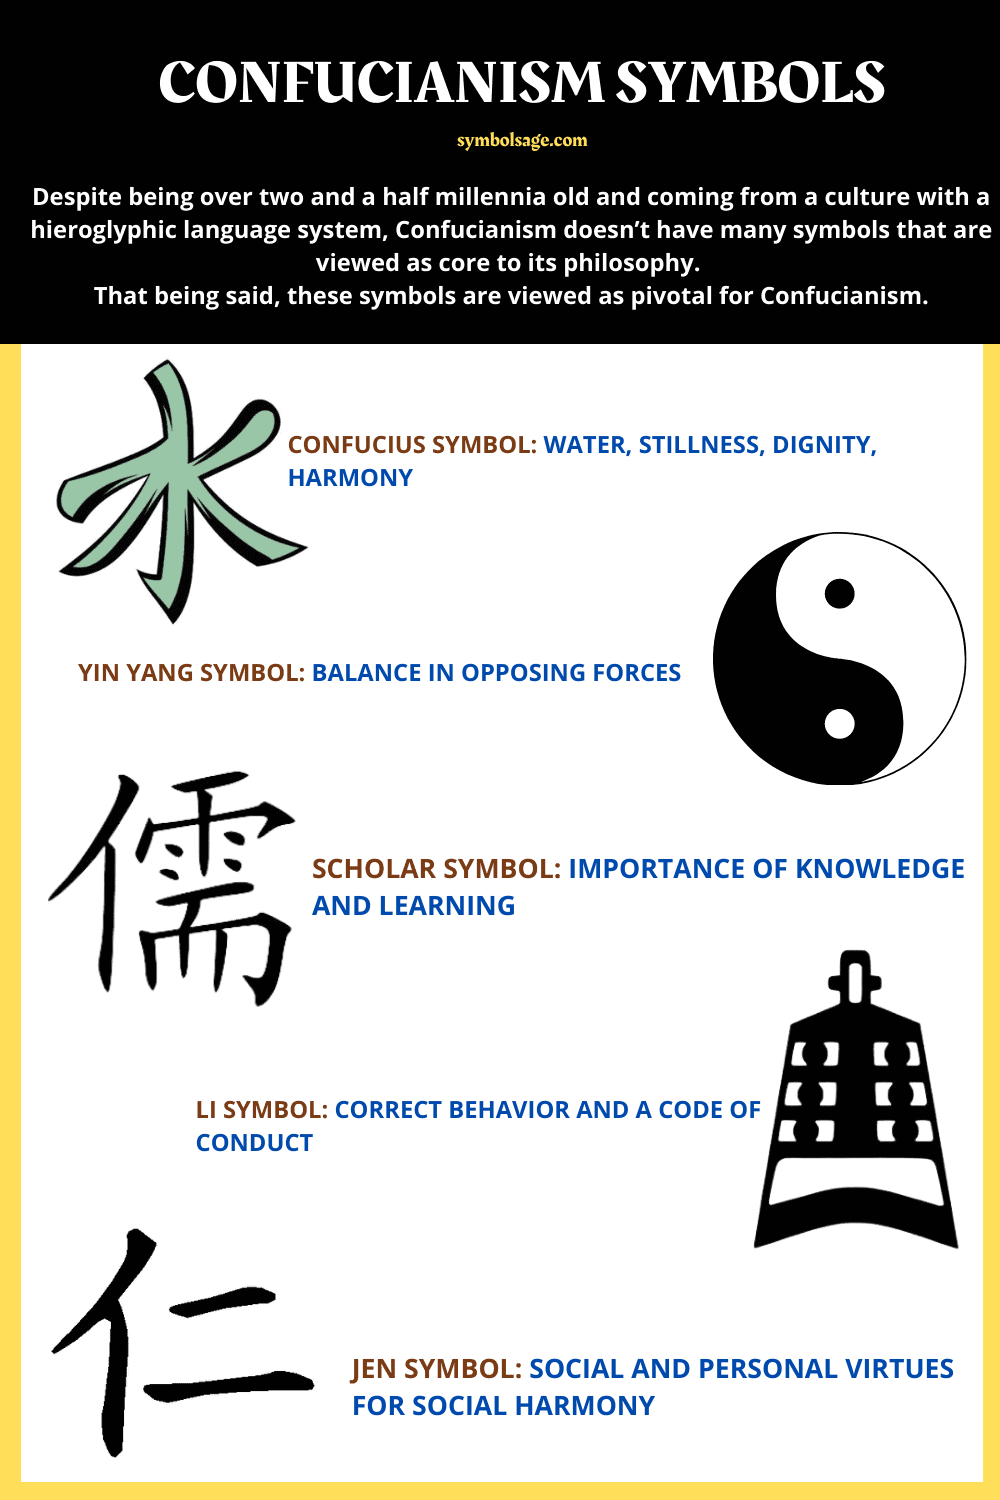 List of Confucianism symbols